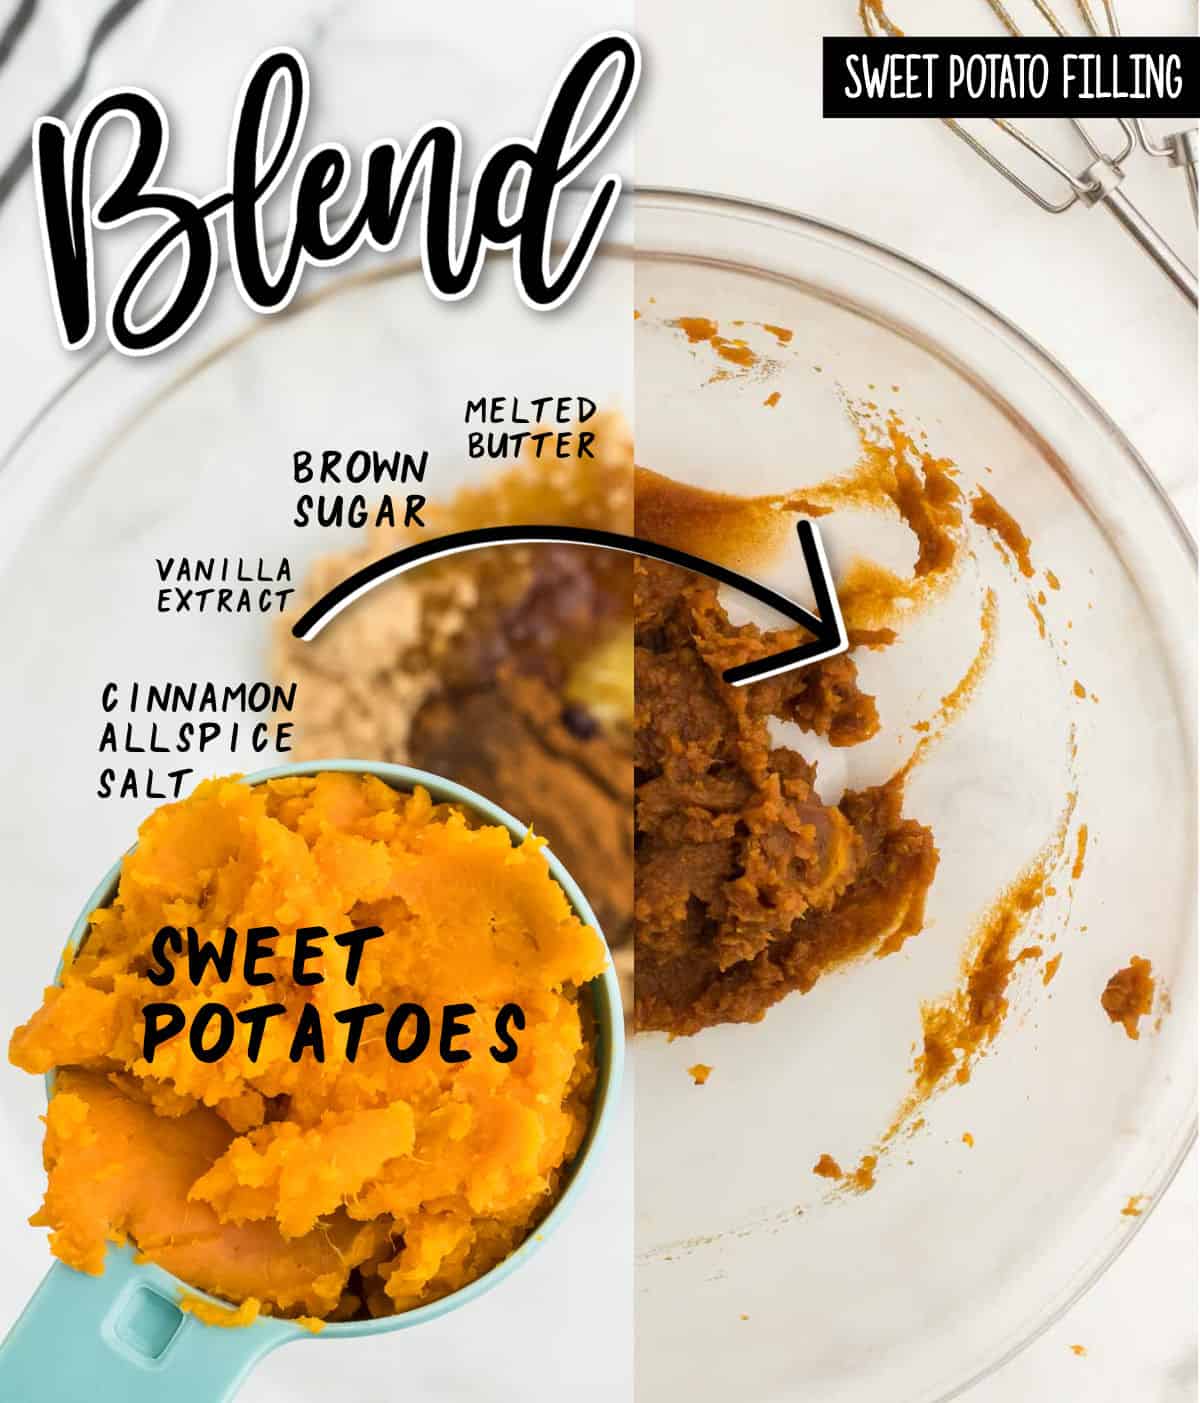 Step: Blending ingredients for the sweet potato filling.